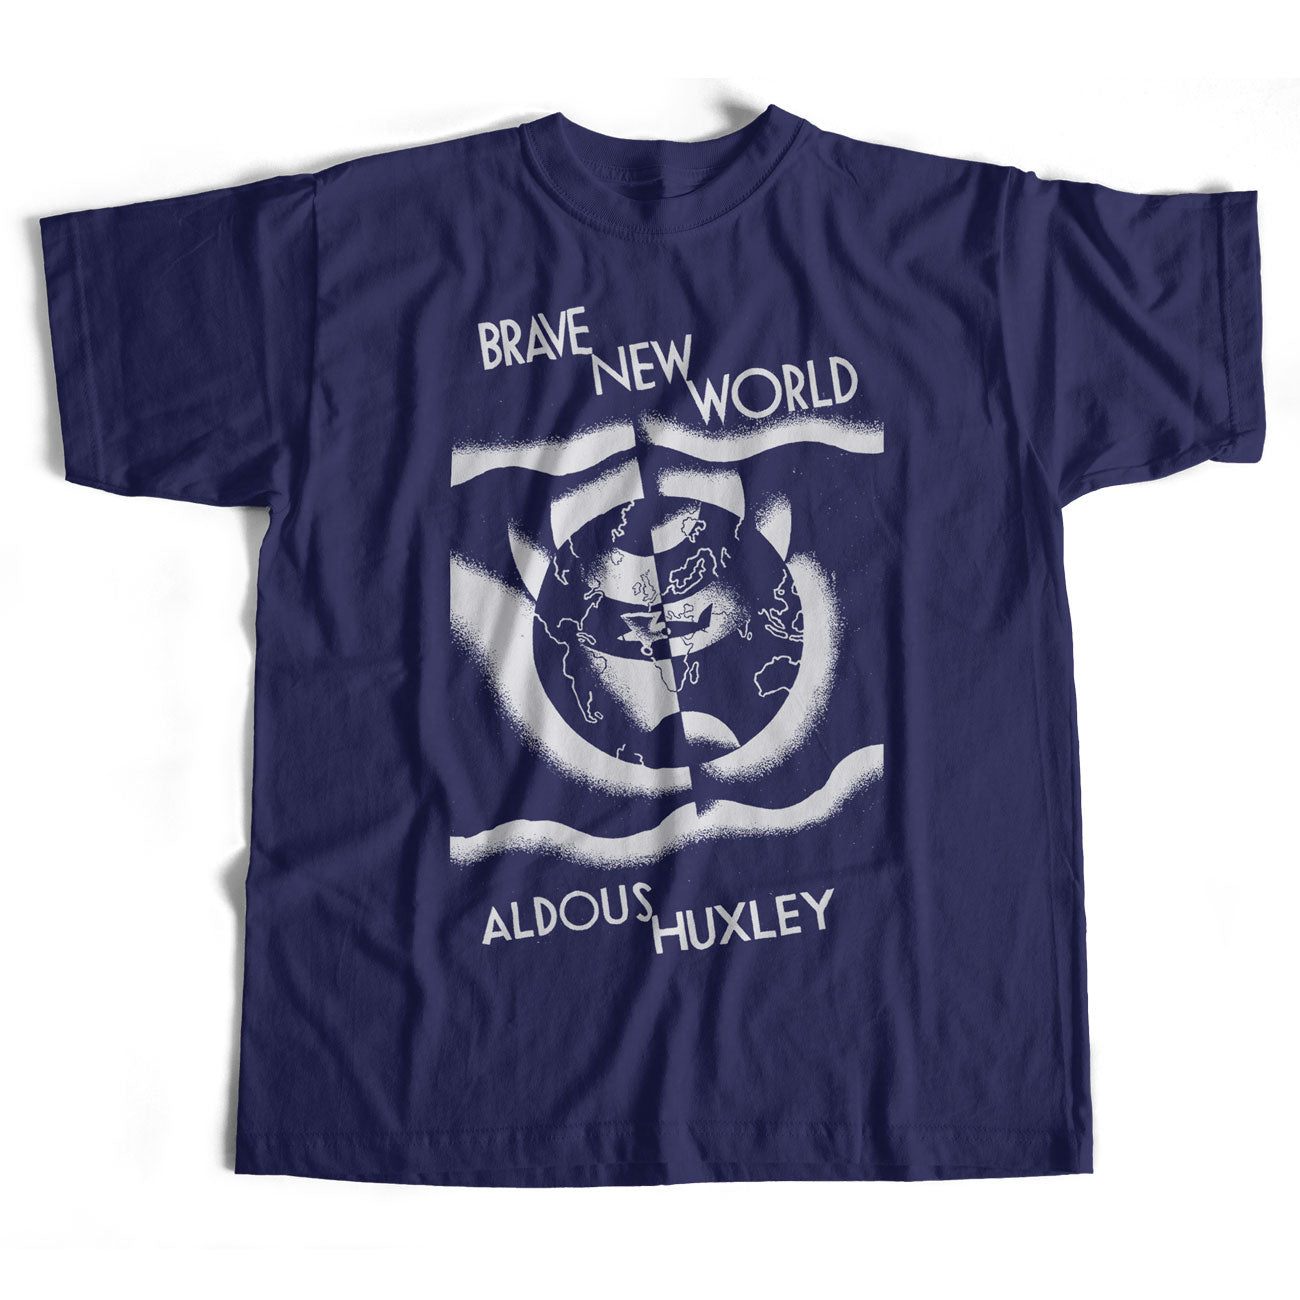 Aldous Huxley T Shirt - Brave New World 1st Edition Cover Classic Literature